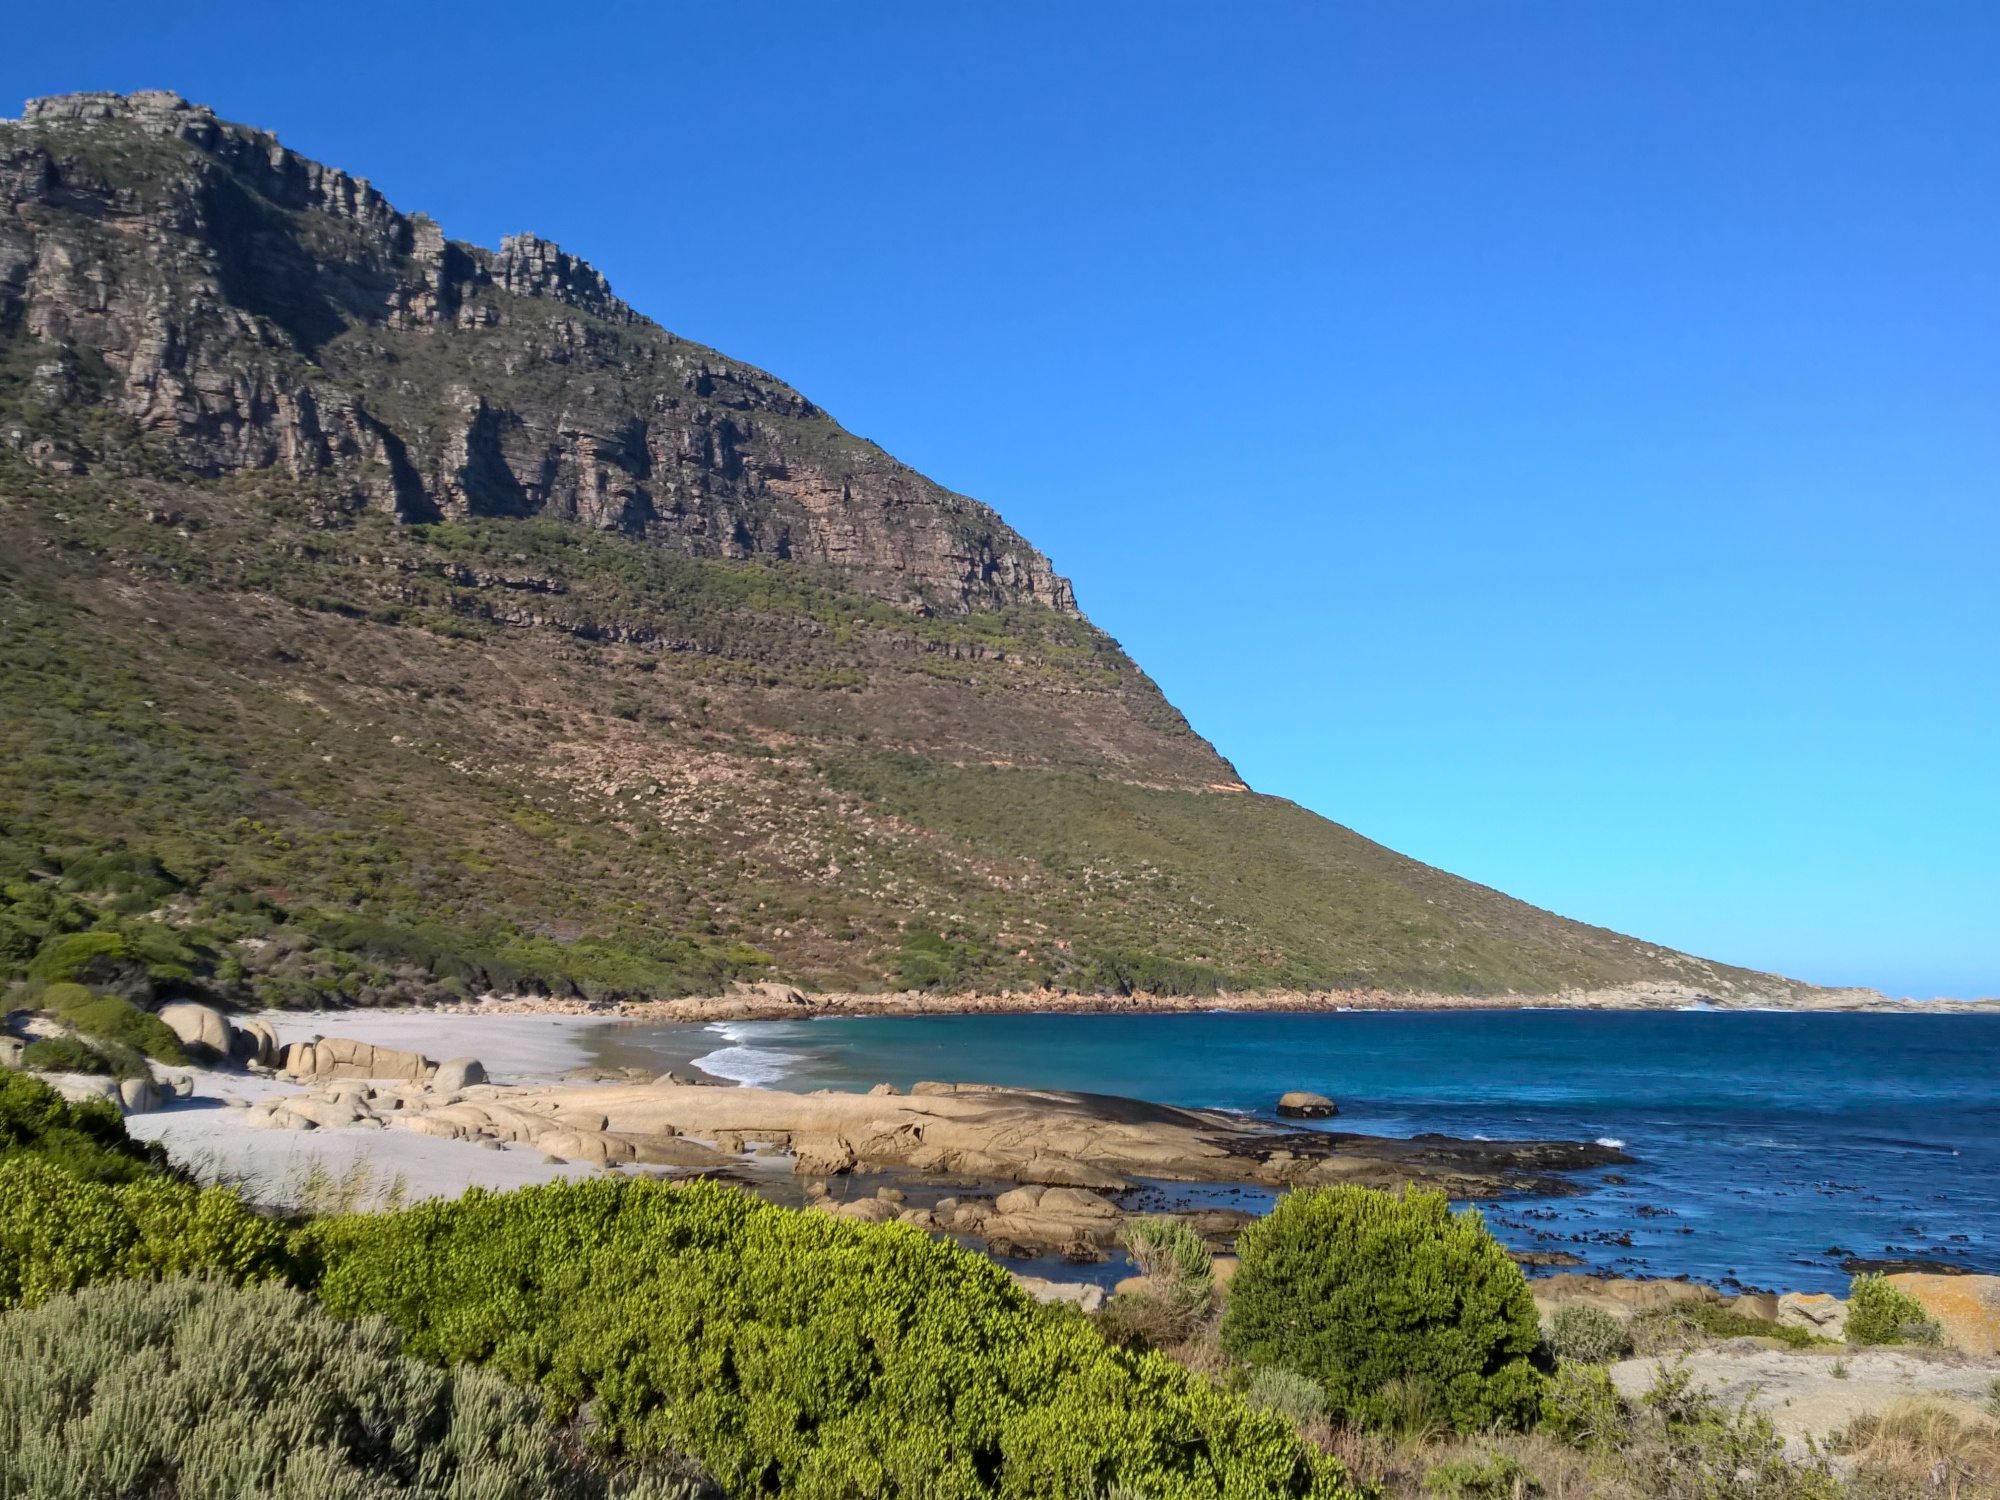 Sandy Bay, South Africa